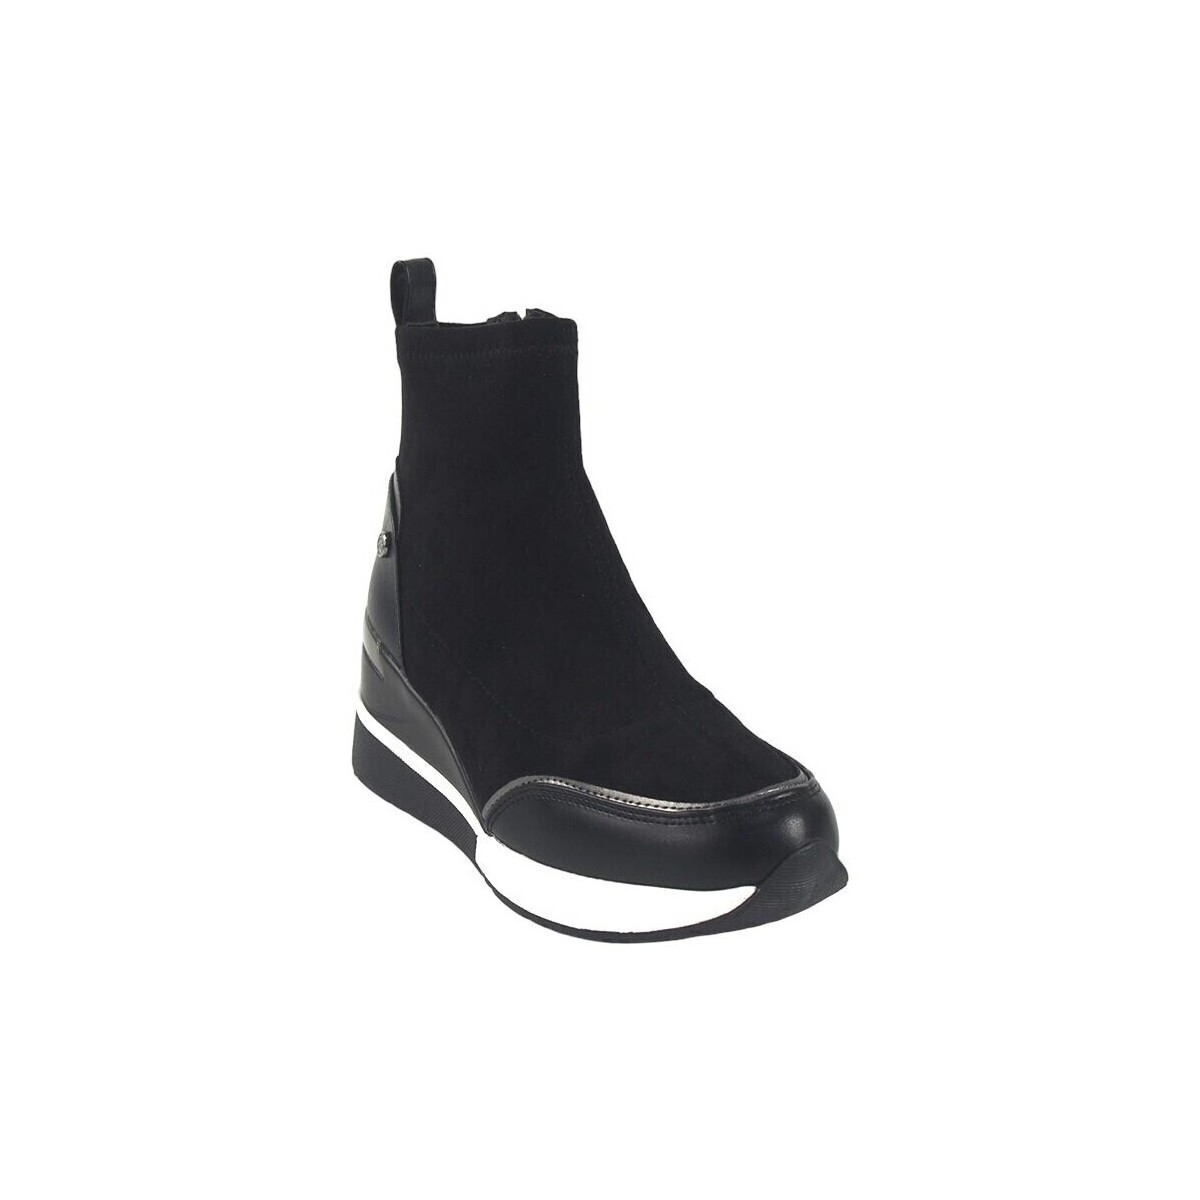 Chaussures Femme Multisport Xti Bottine femme  141576 noir Noir